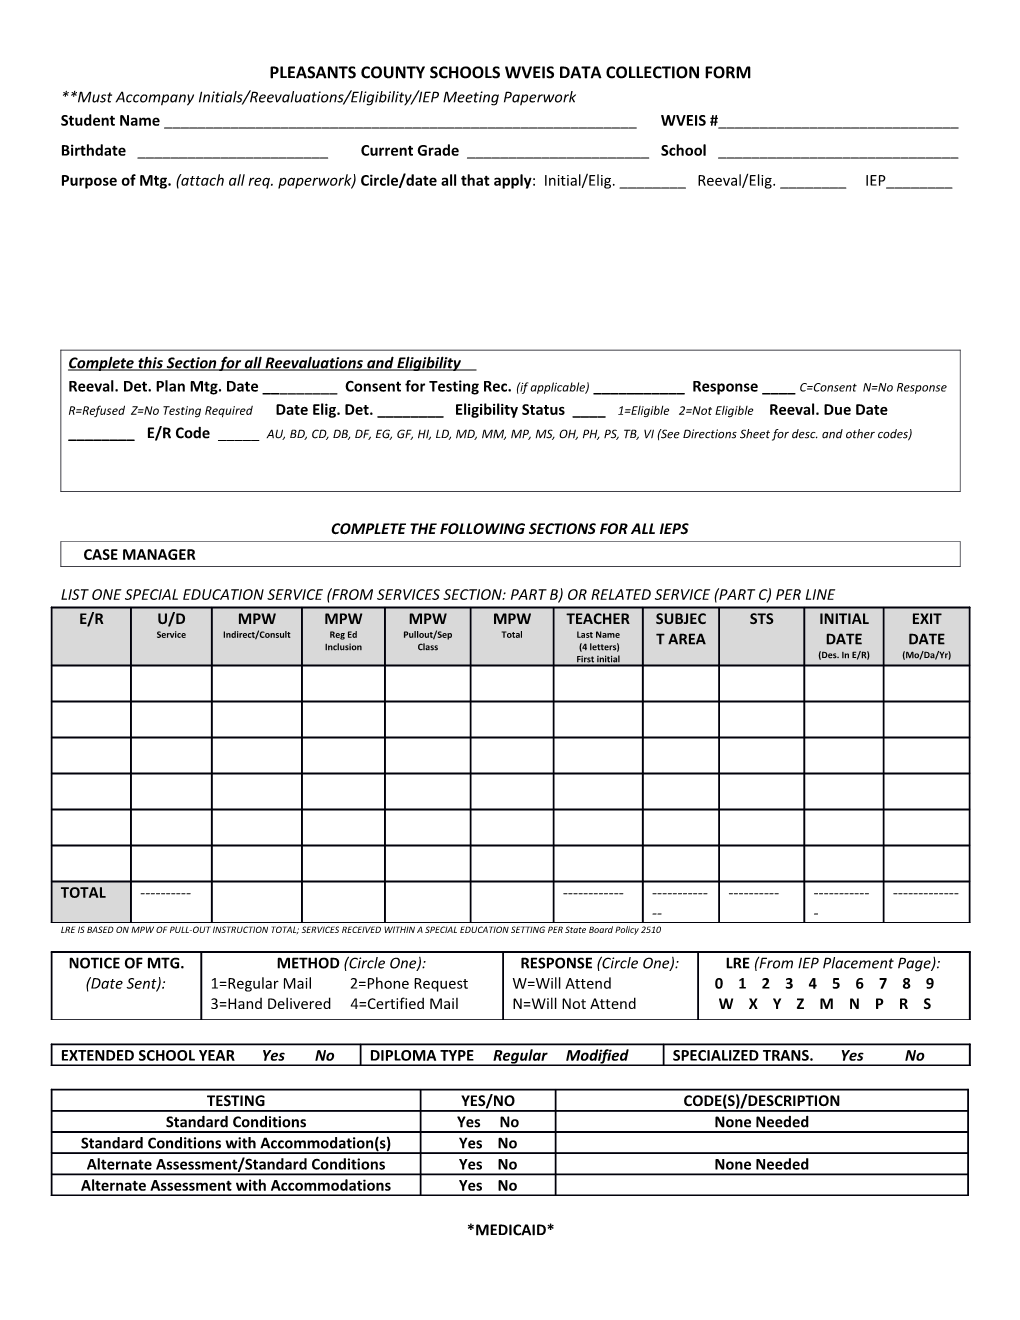 Pleasants County Schools Wveis Data Collection Form